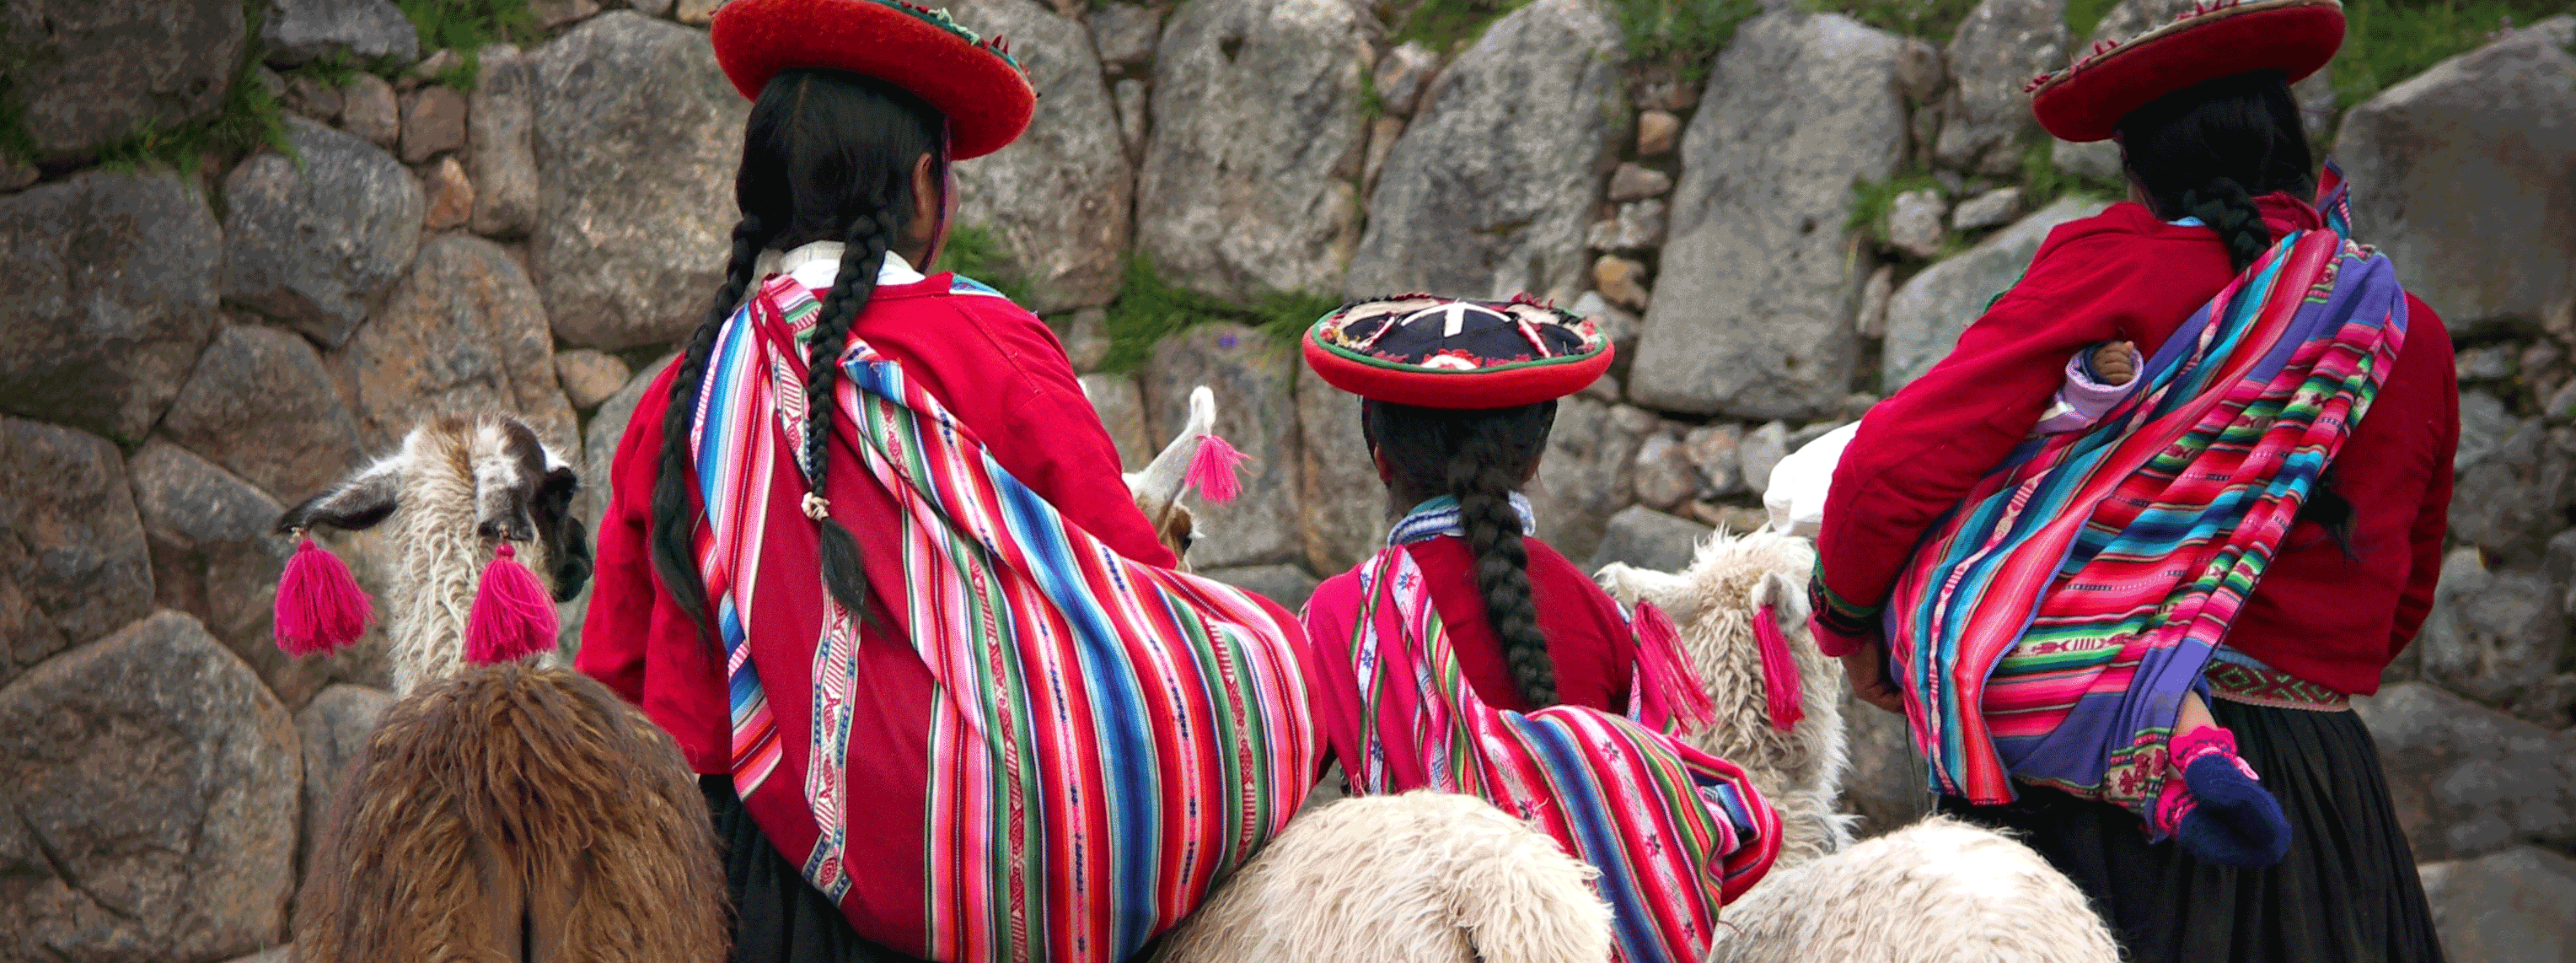 /resource/Images/southamerica/peru/headerimage/Peruvian-Girls-and-Alpacas-at-Sacsayhuaman,-Cusco-Peru.png